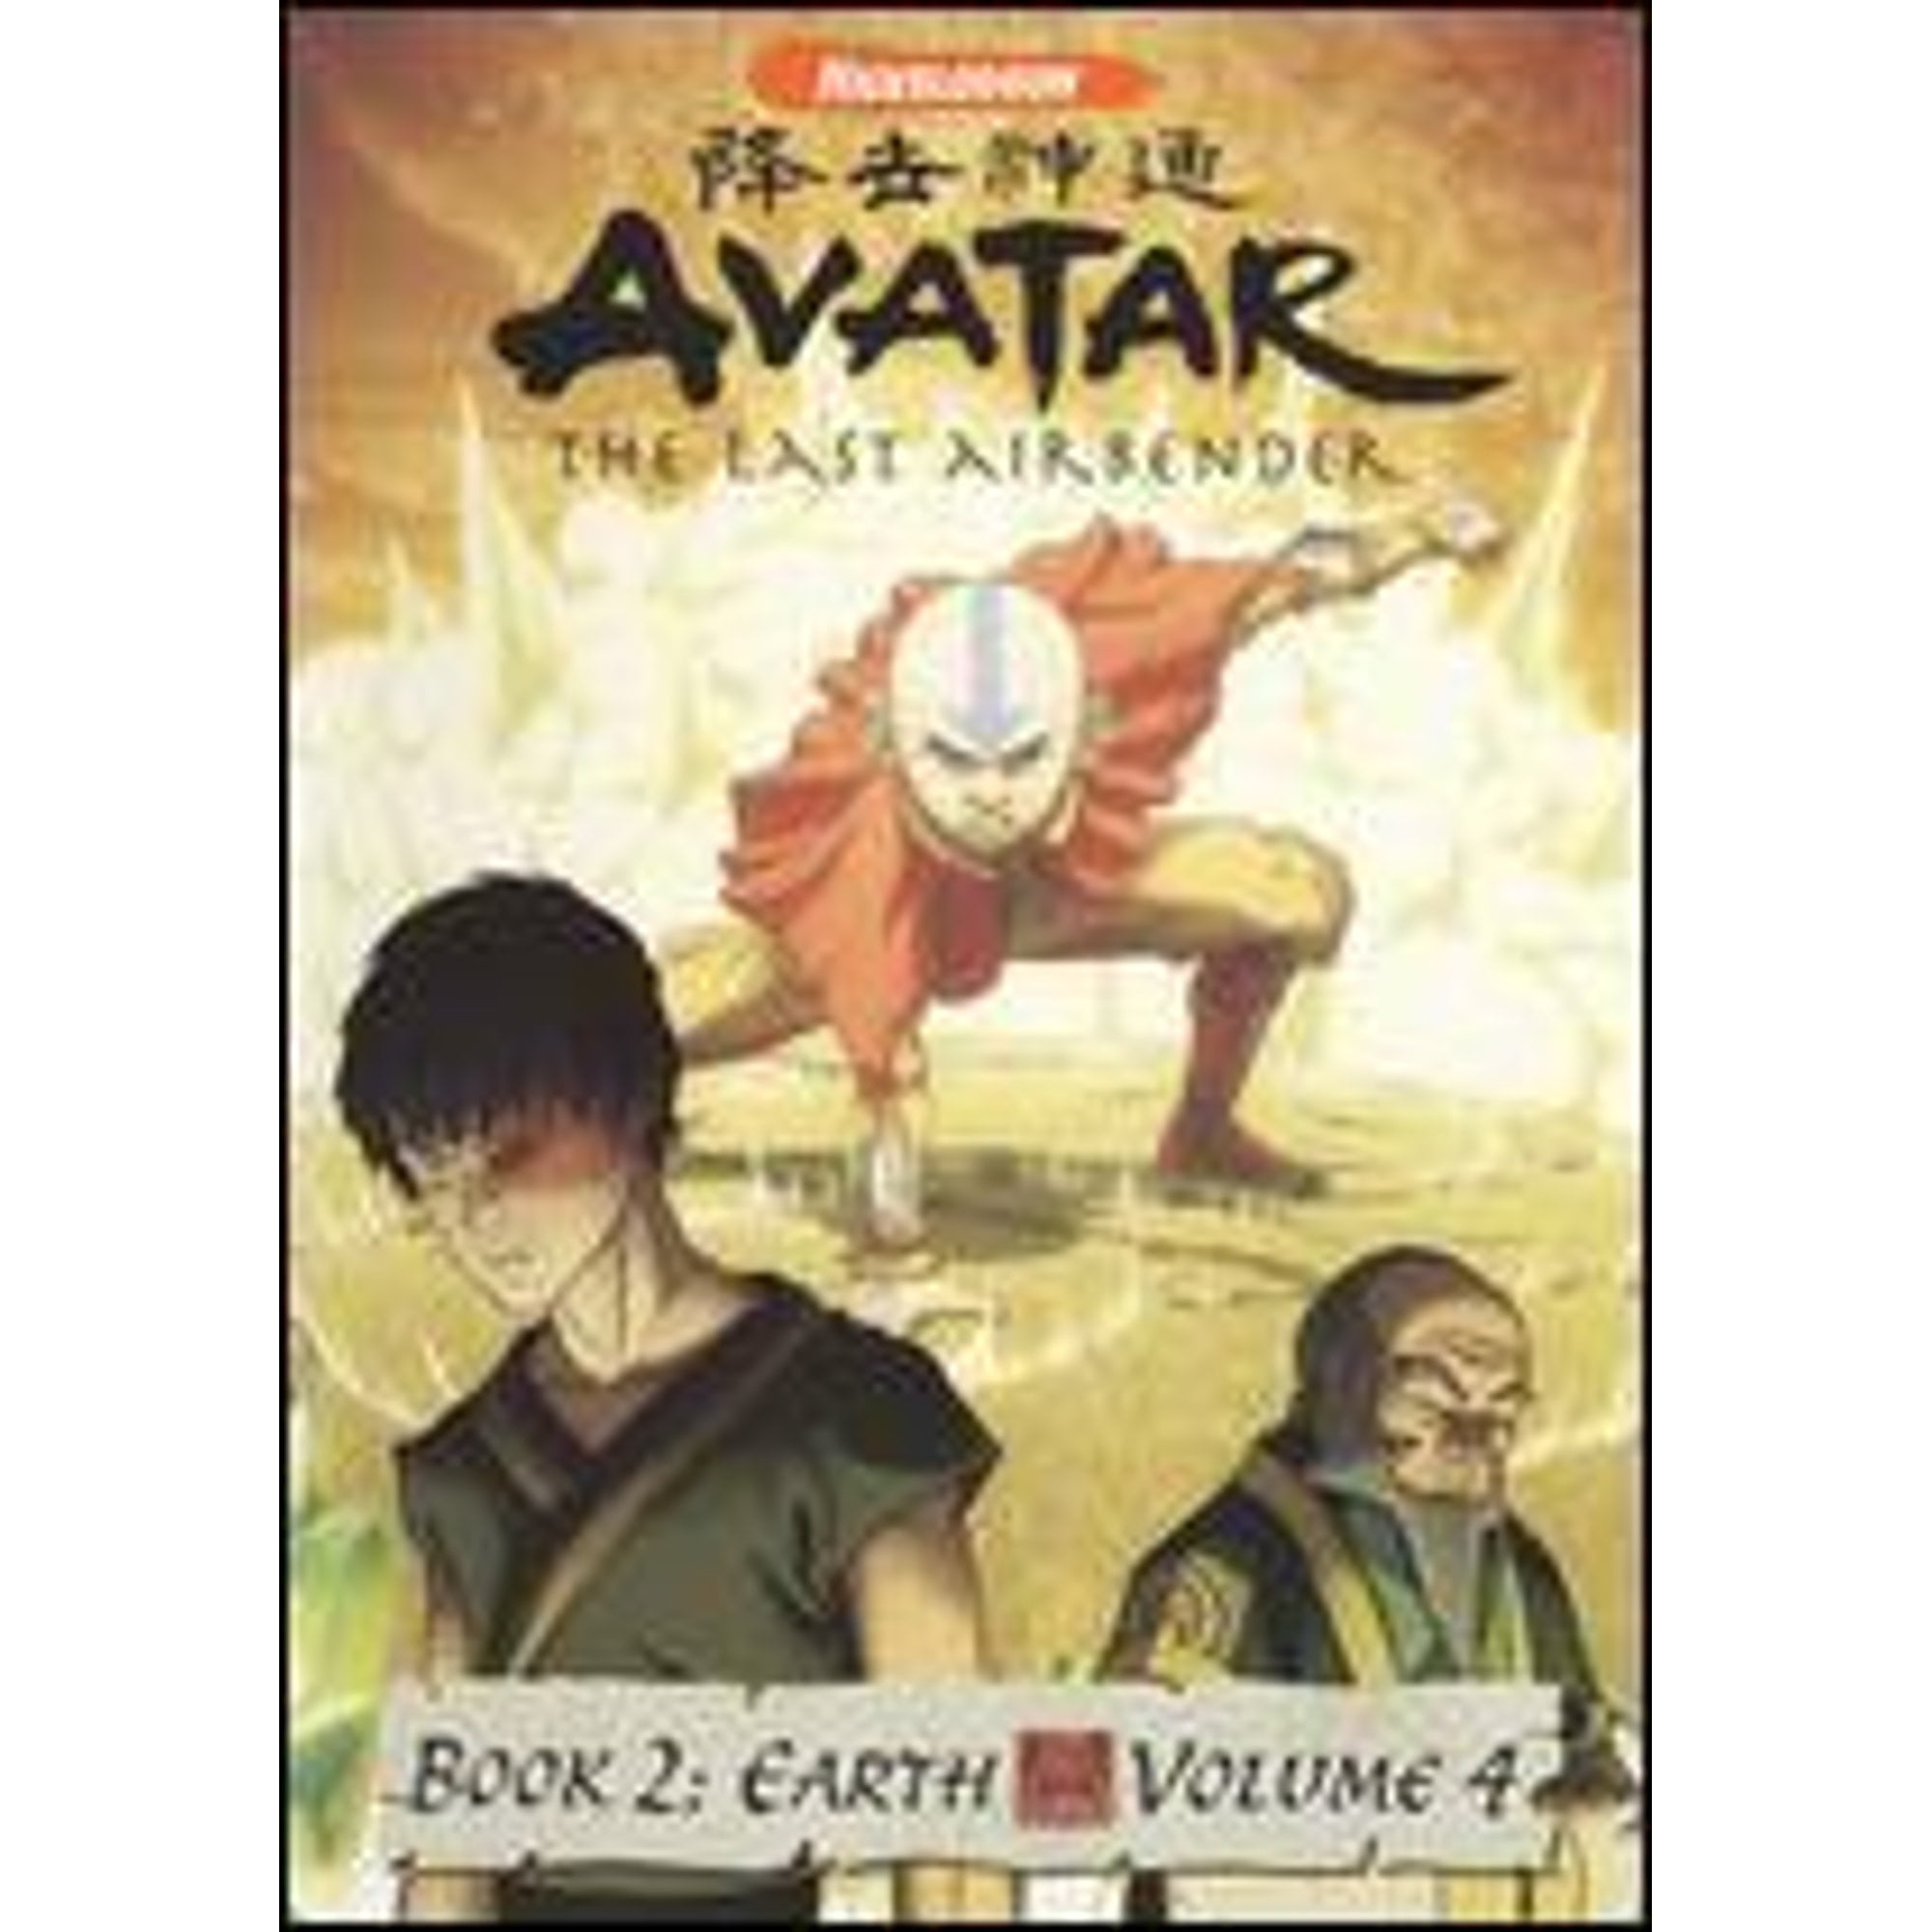 Avatar The Last Airbender - Book 2 Earth, Vol. 3